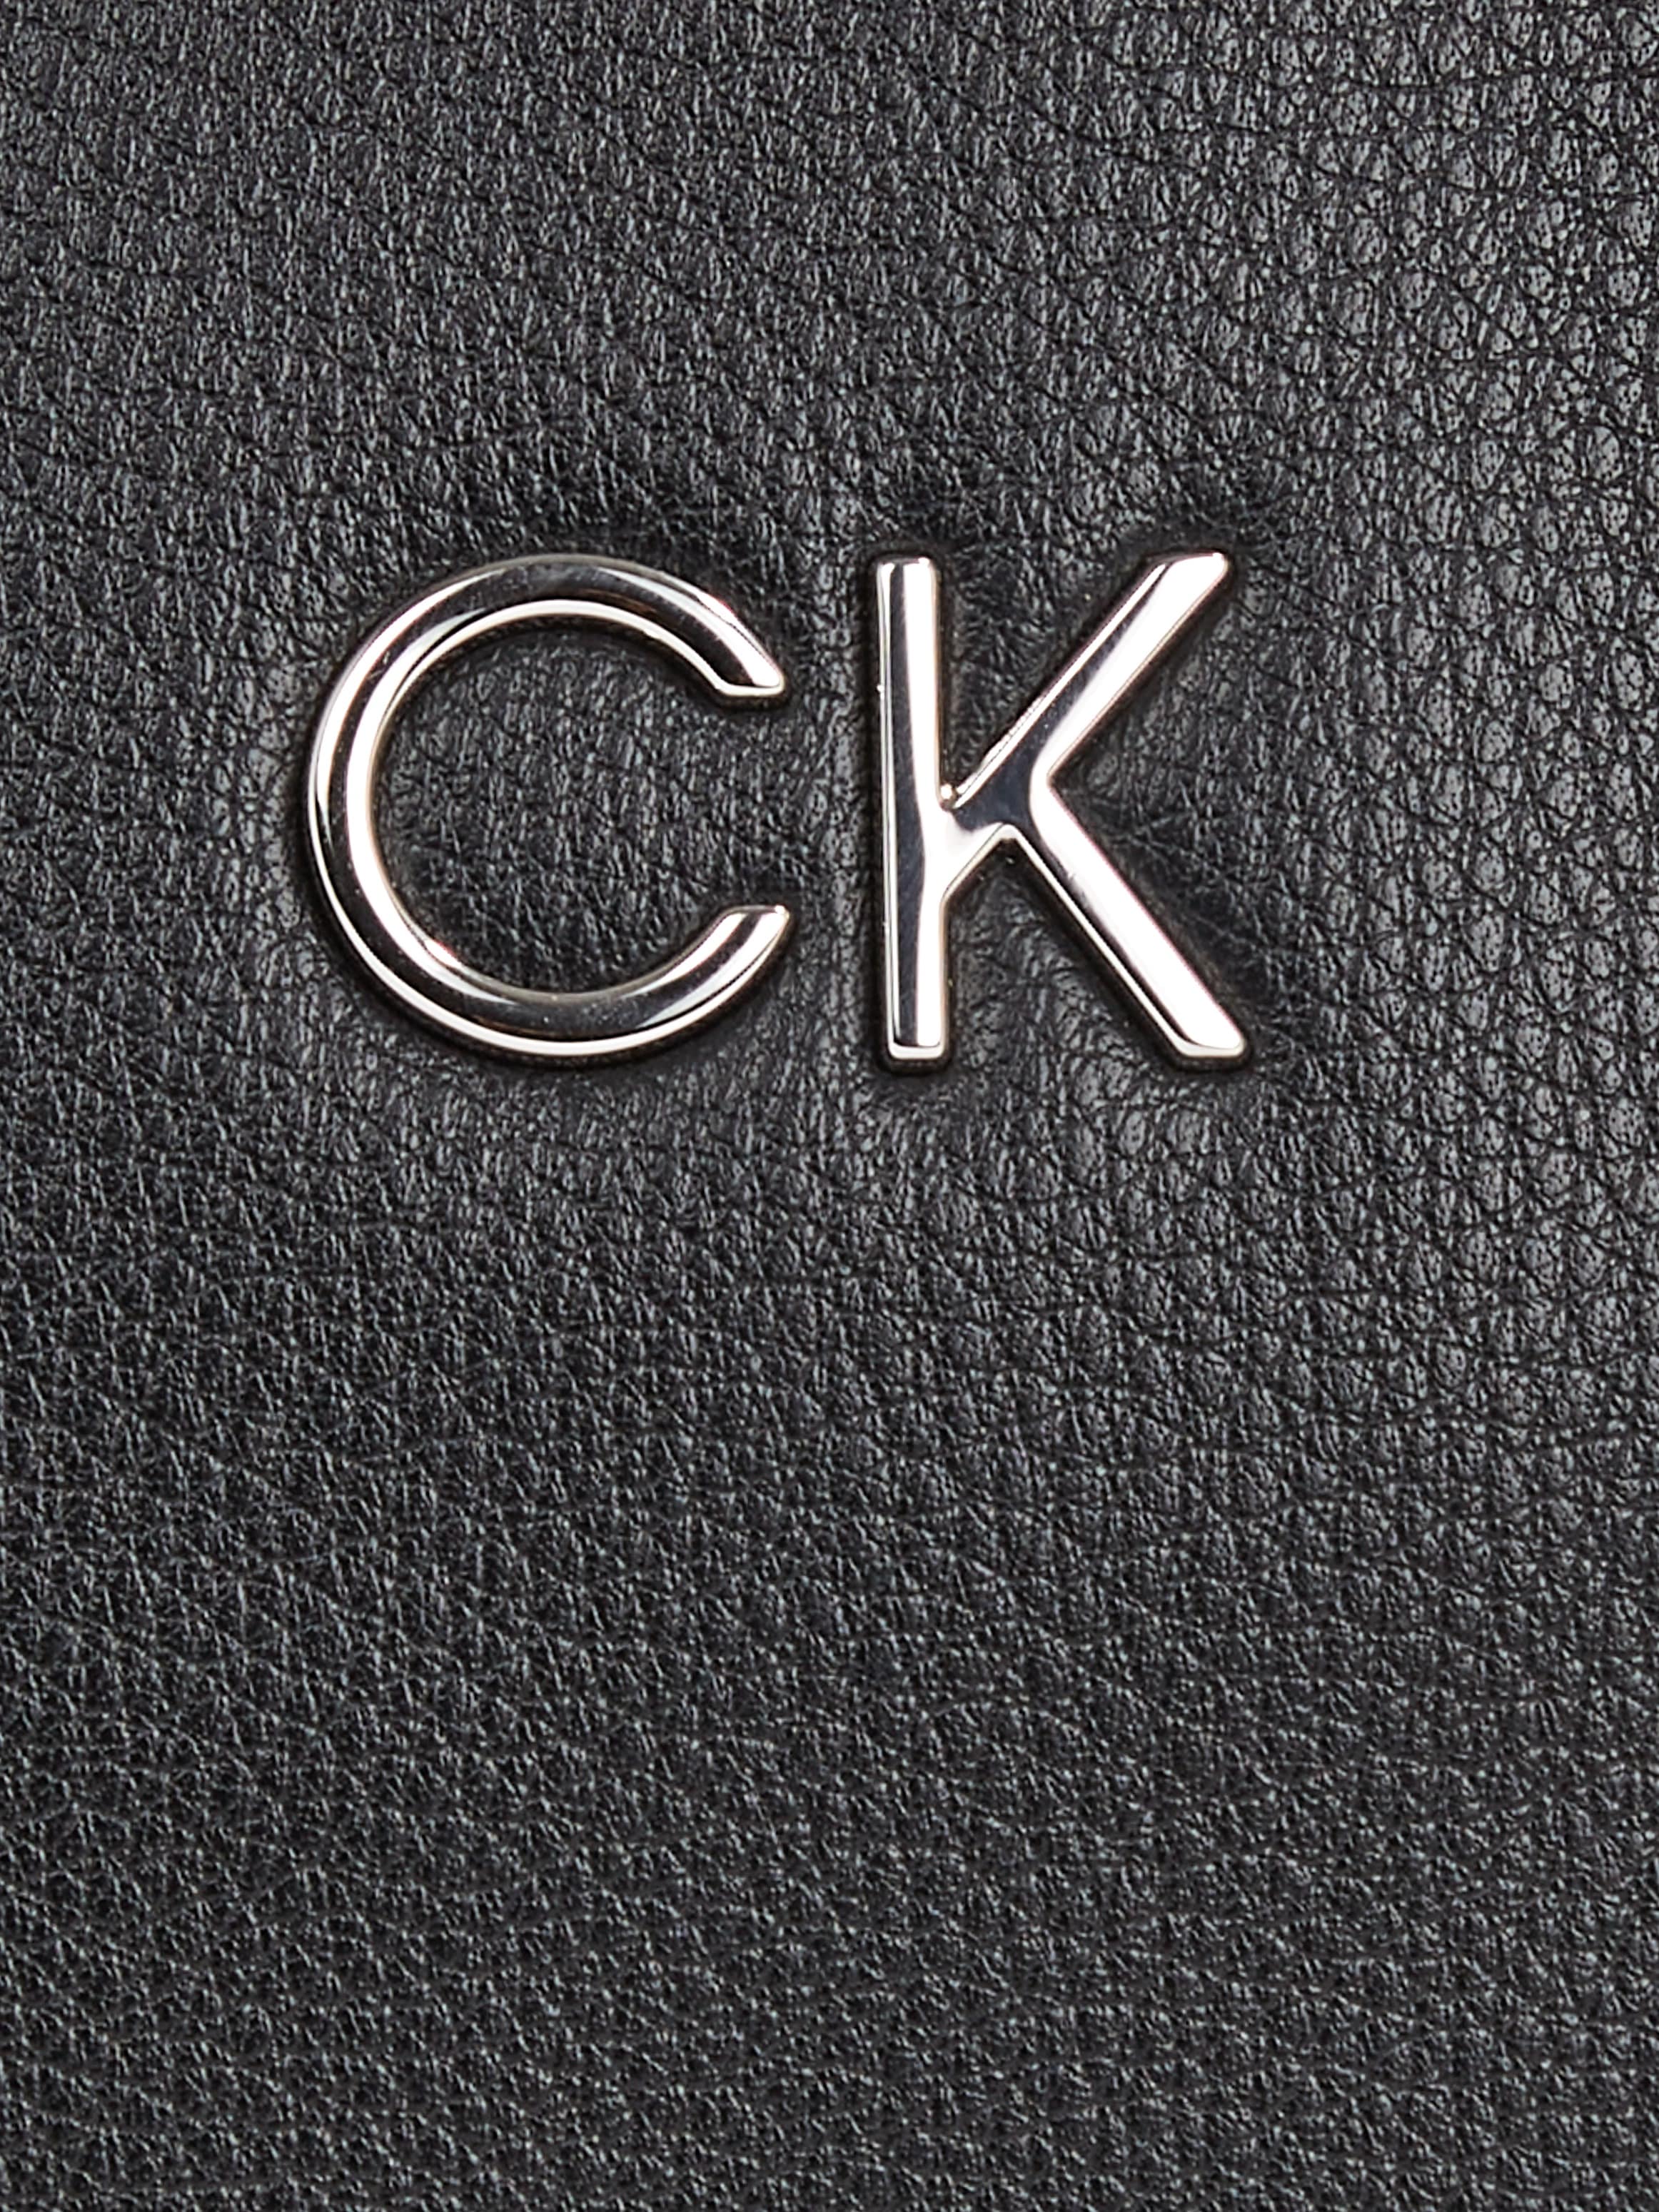 Calvin Klein Mini Bag »CK DAILY SMALL DOME PEBBLE«, Handtasche Damen Tasche Damen Schultertasche